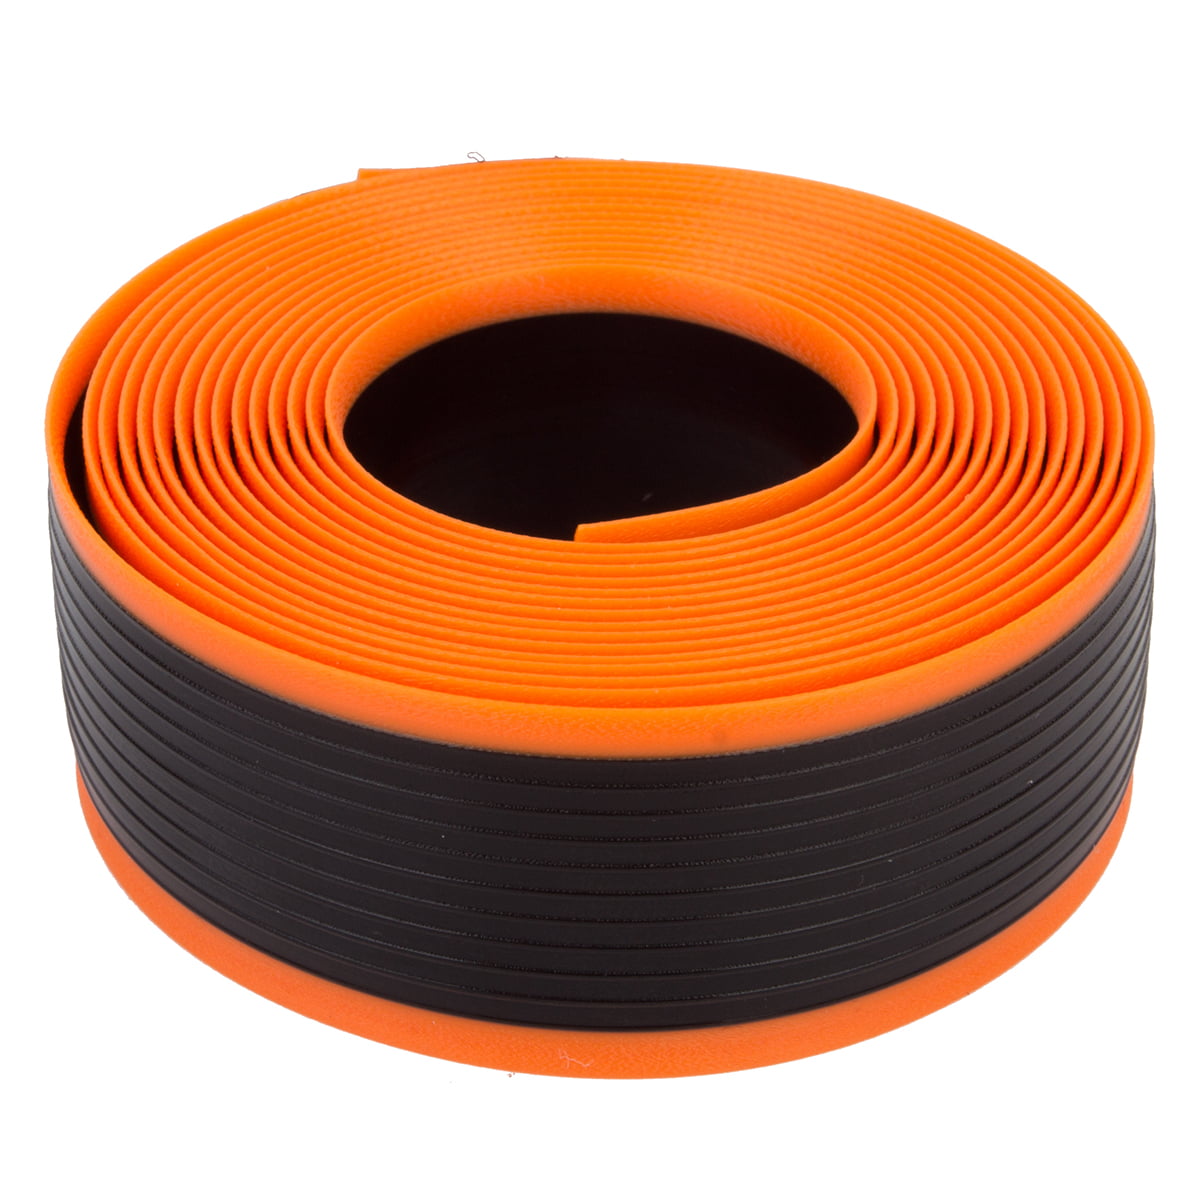 27x1 Orange 700x20-25 Tuffy Tire Liner Mr 